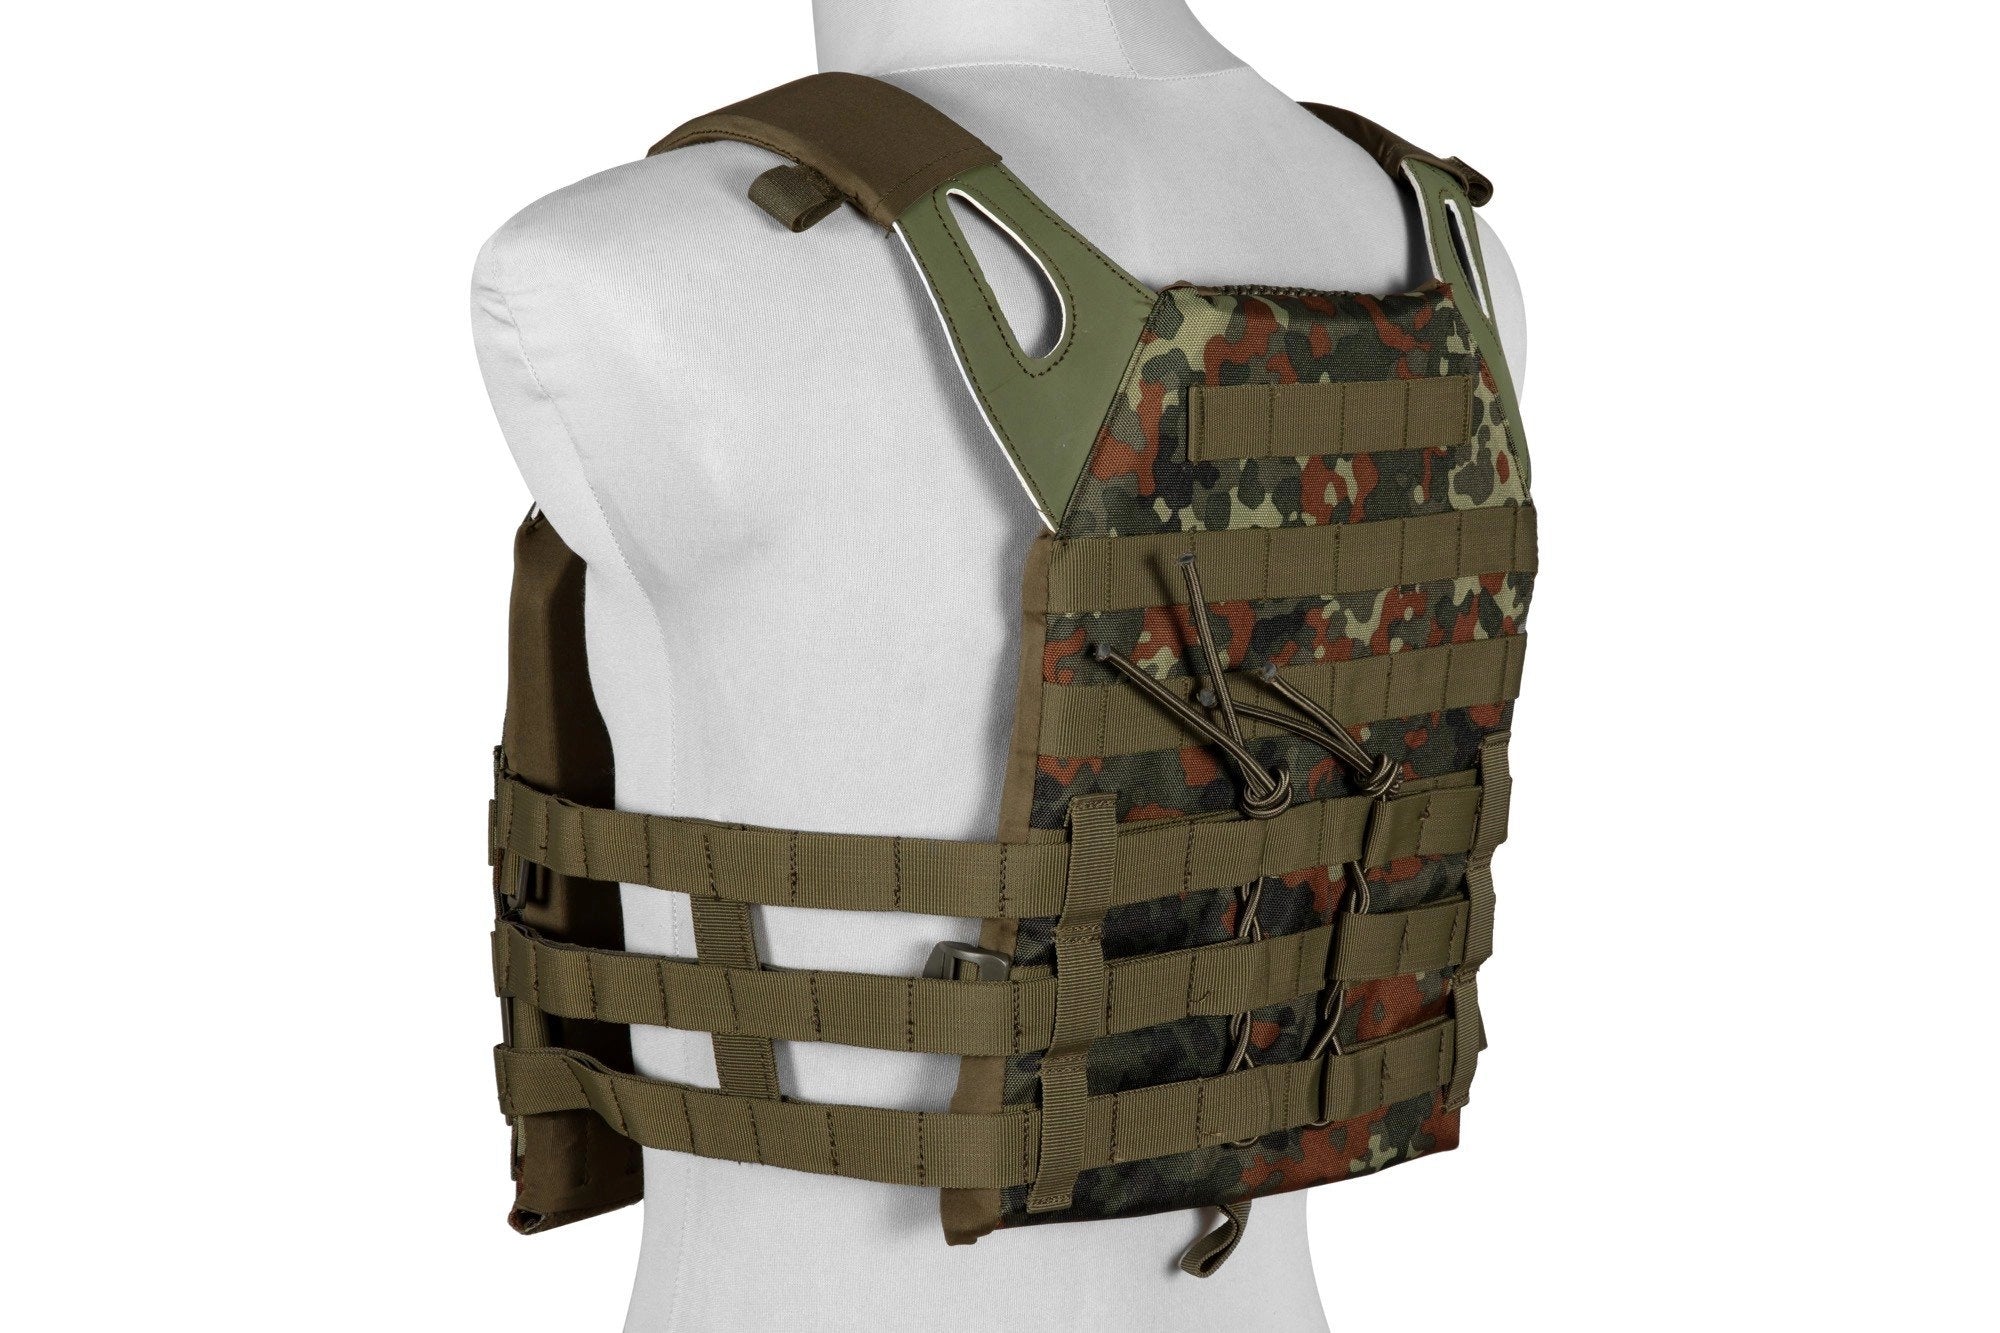 Jump type tactical vest - Flecktarn